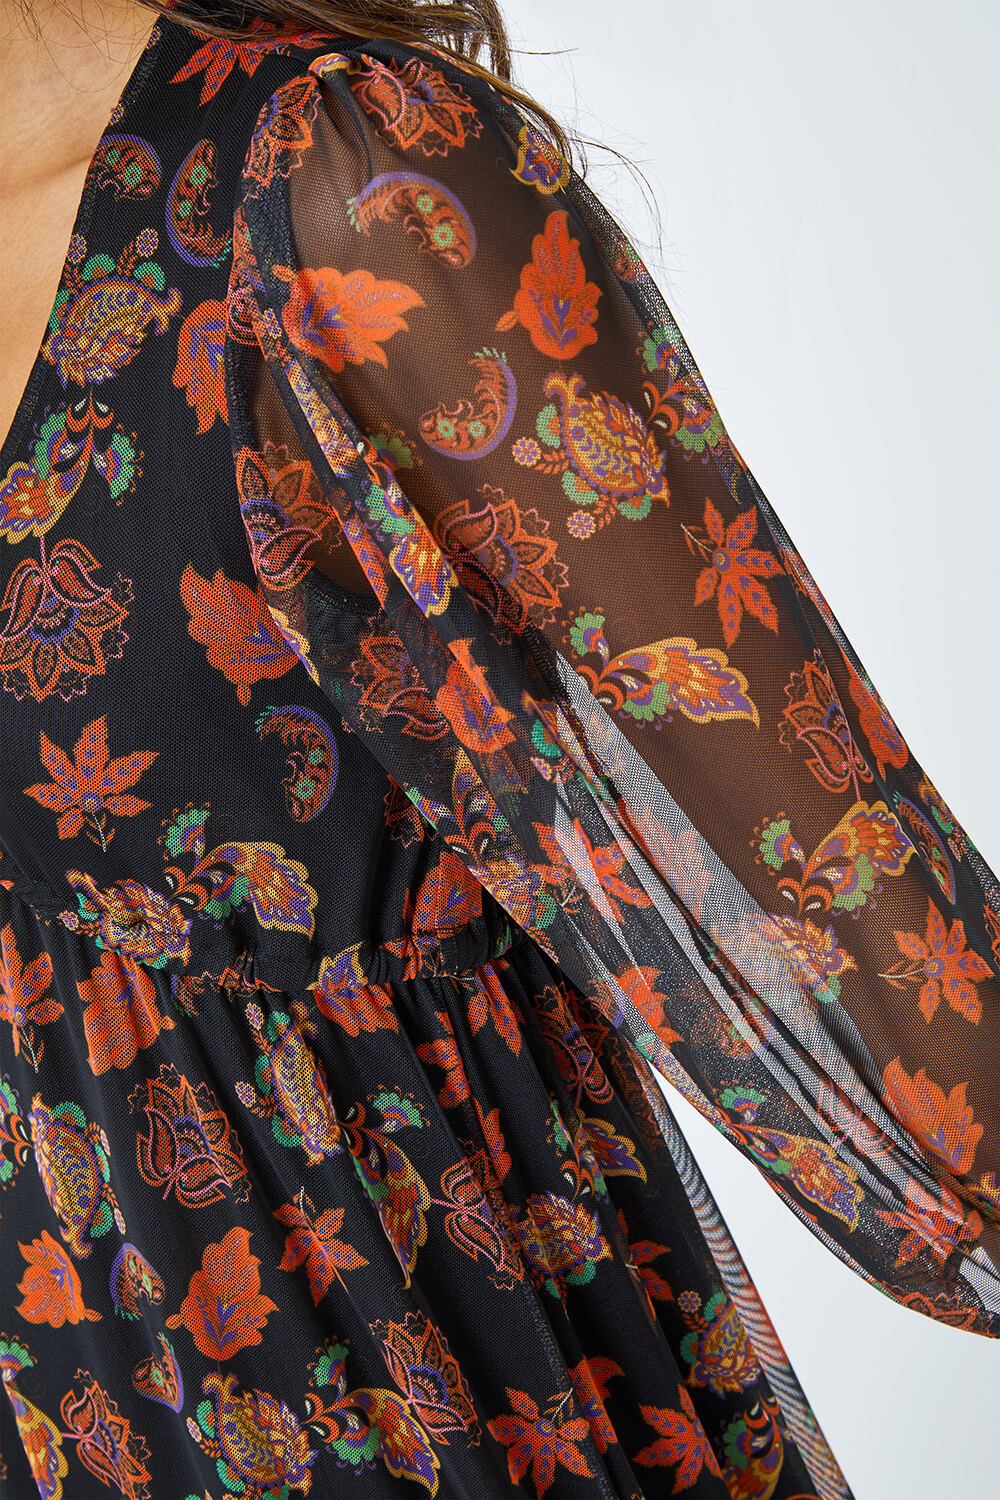 ORANGE Paisley Print Midi Stretch Dress, Image 5 of 5